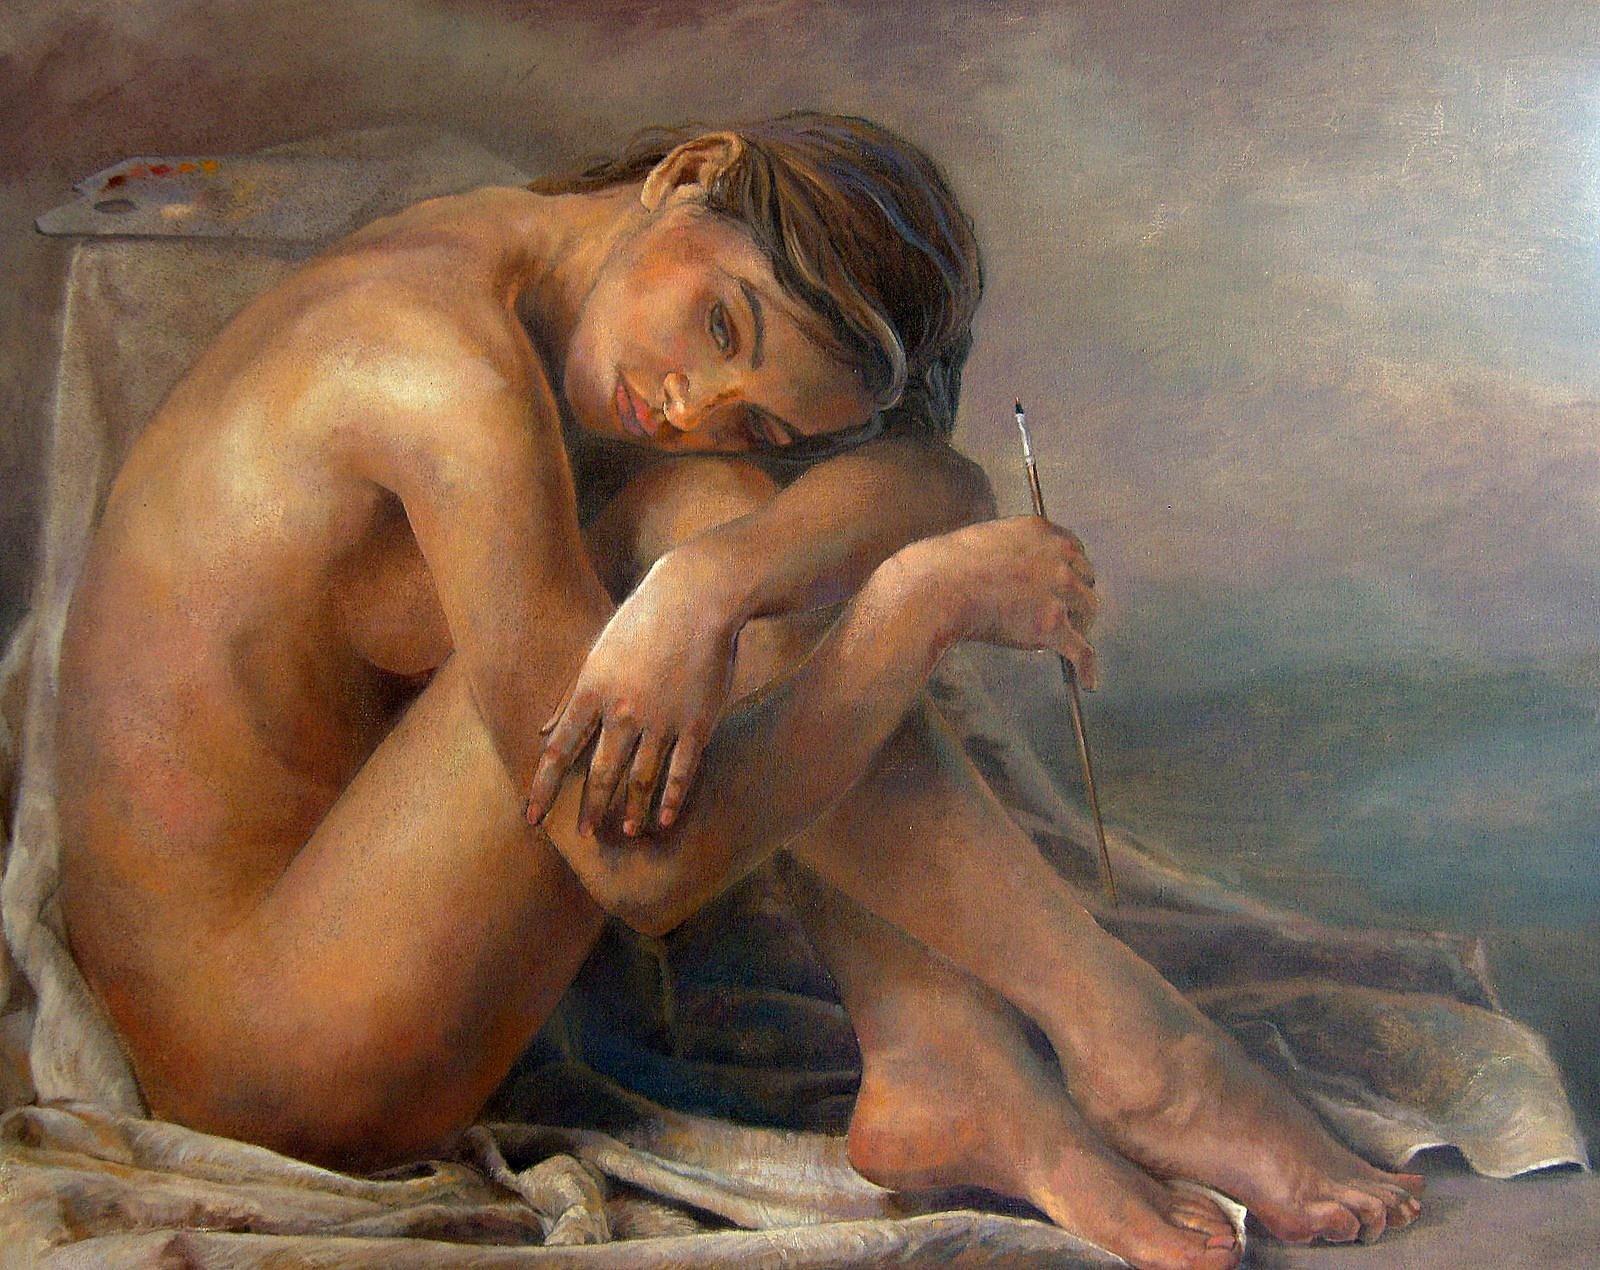 Remy Daza Rojas, Bolivian painter. https://www.taringa.net/posts/arte/15493...